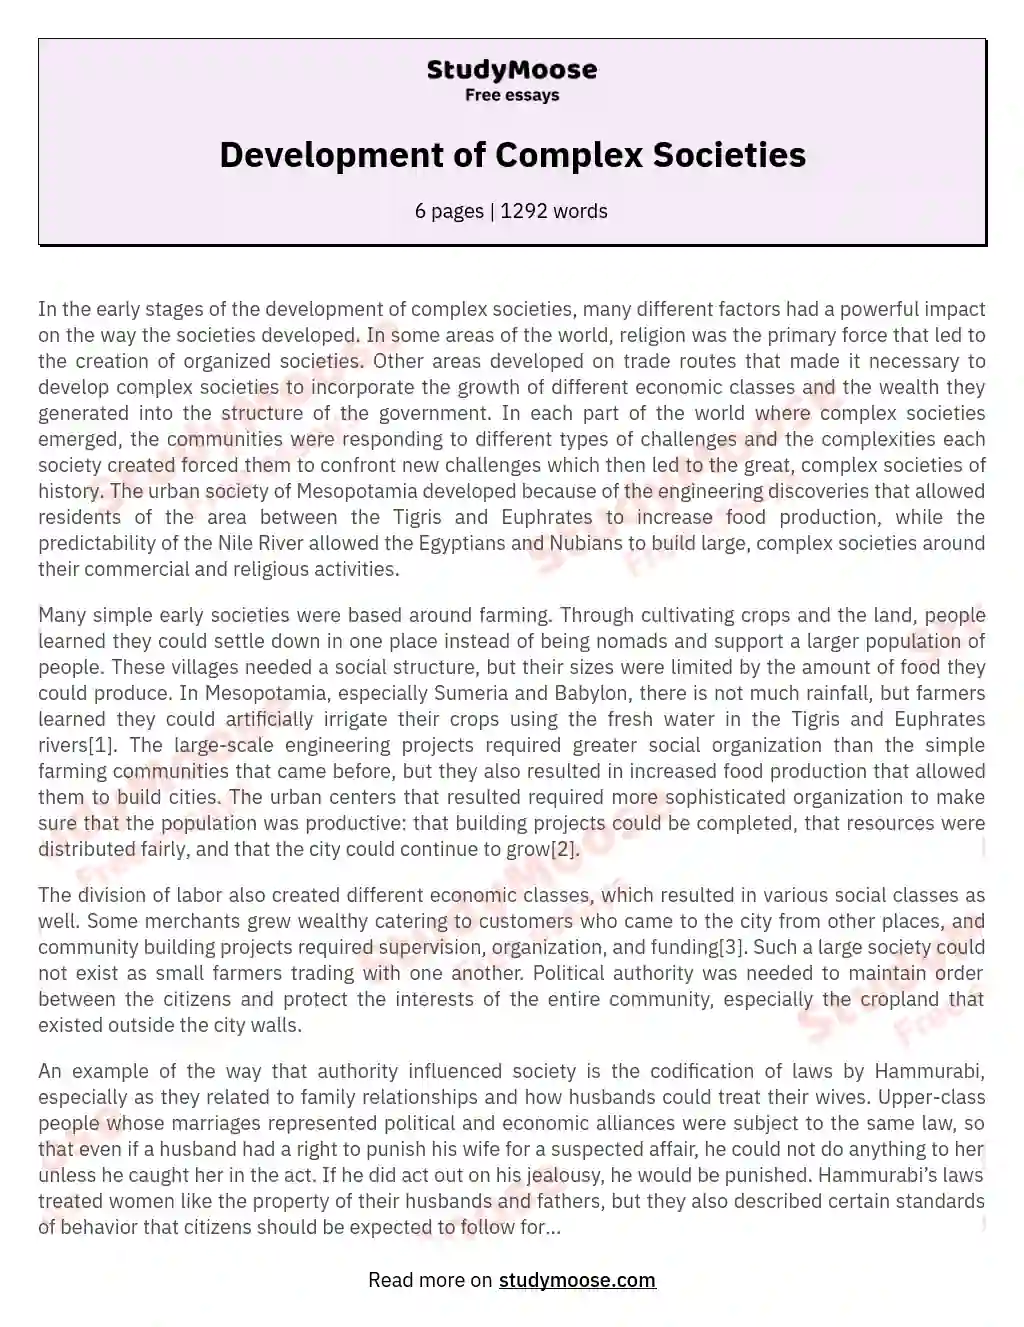 Development of Complex Societies essay